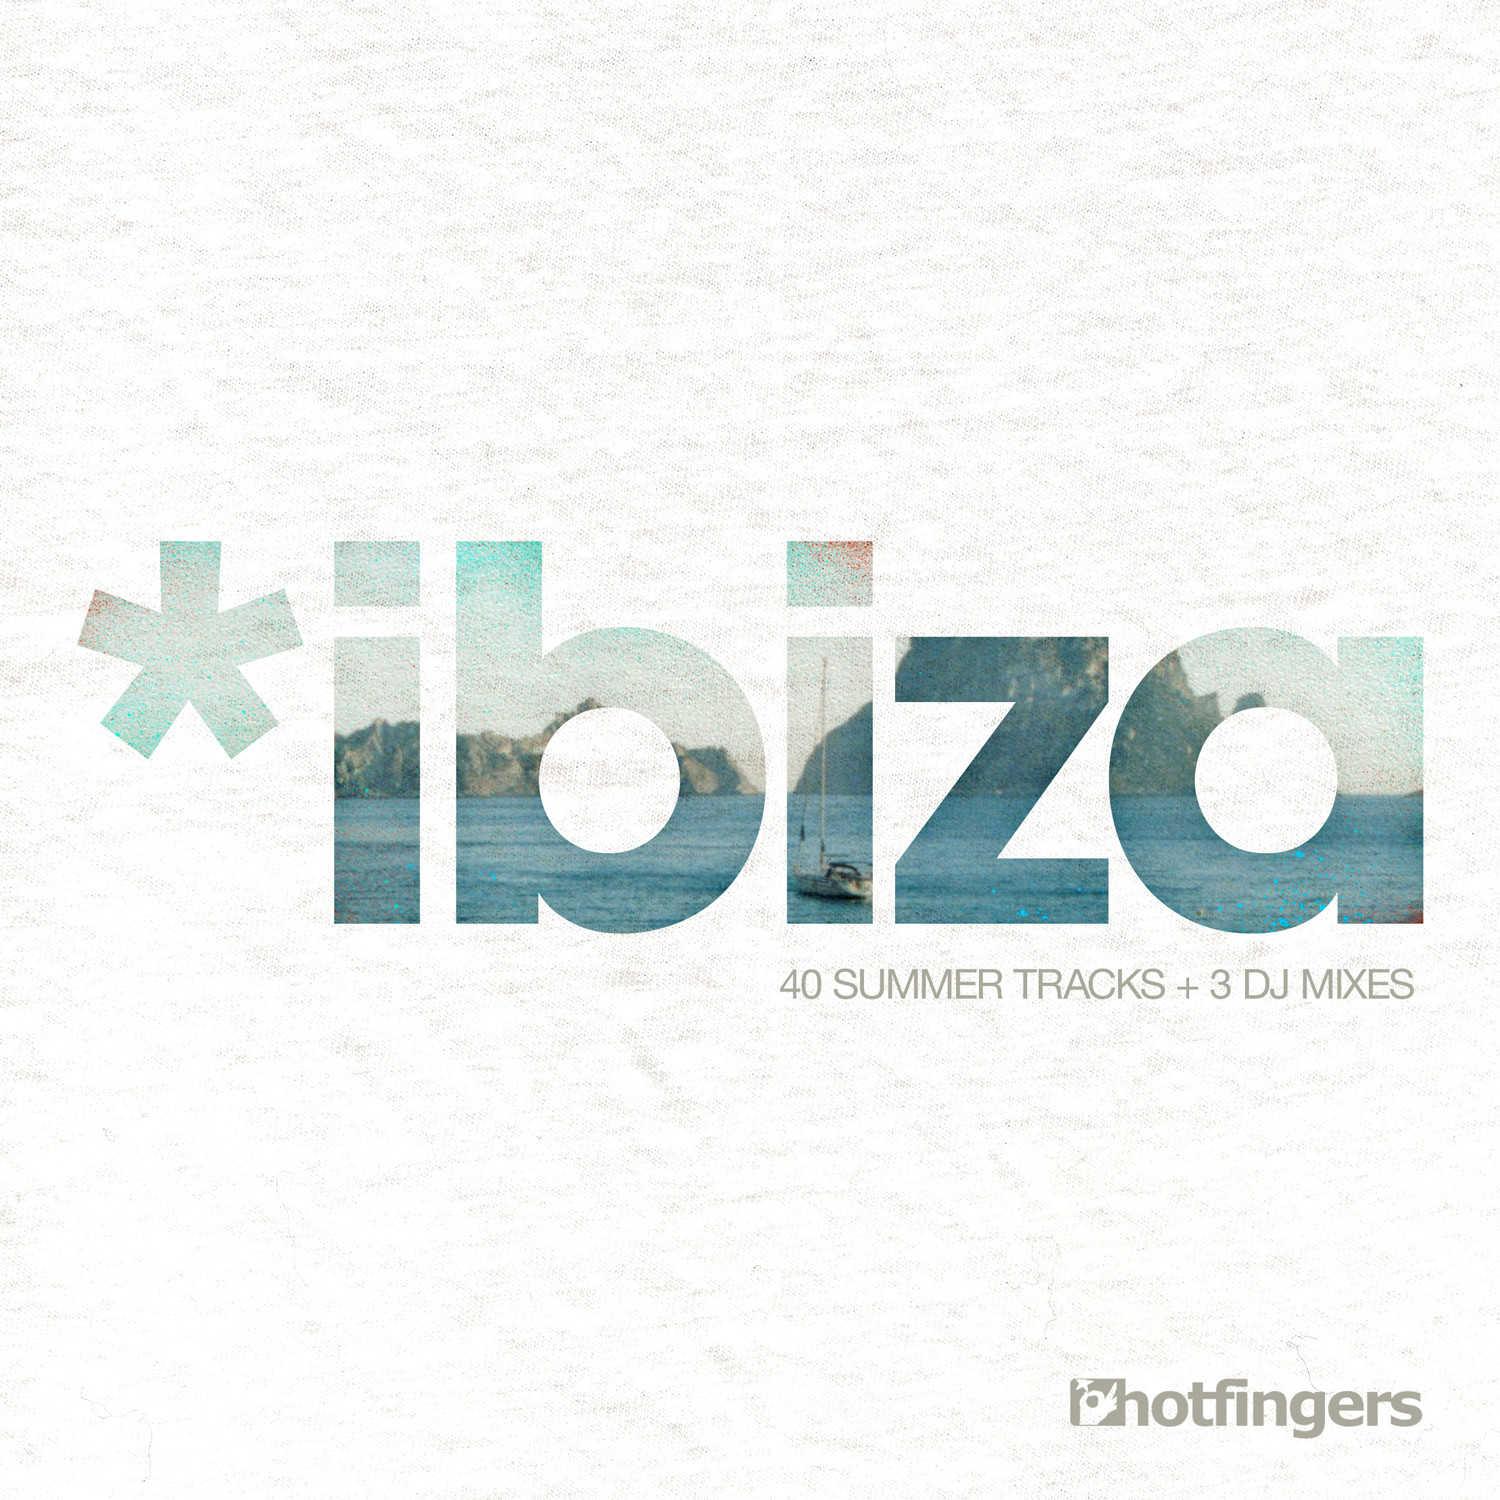 Hotfingers Ibiza 2013